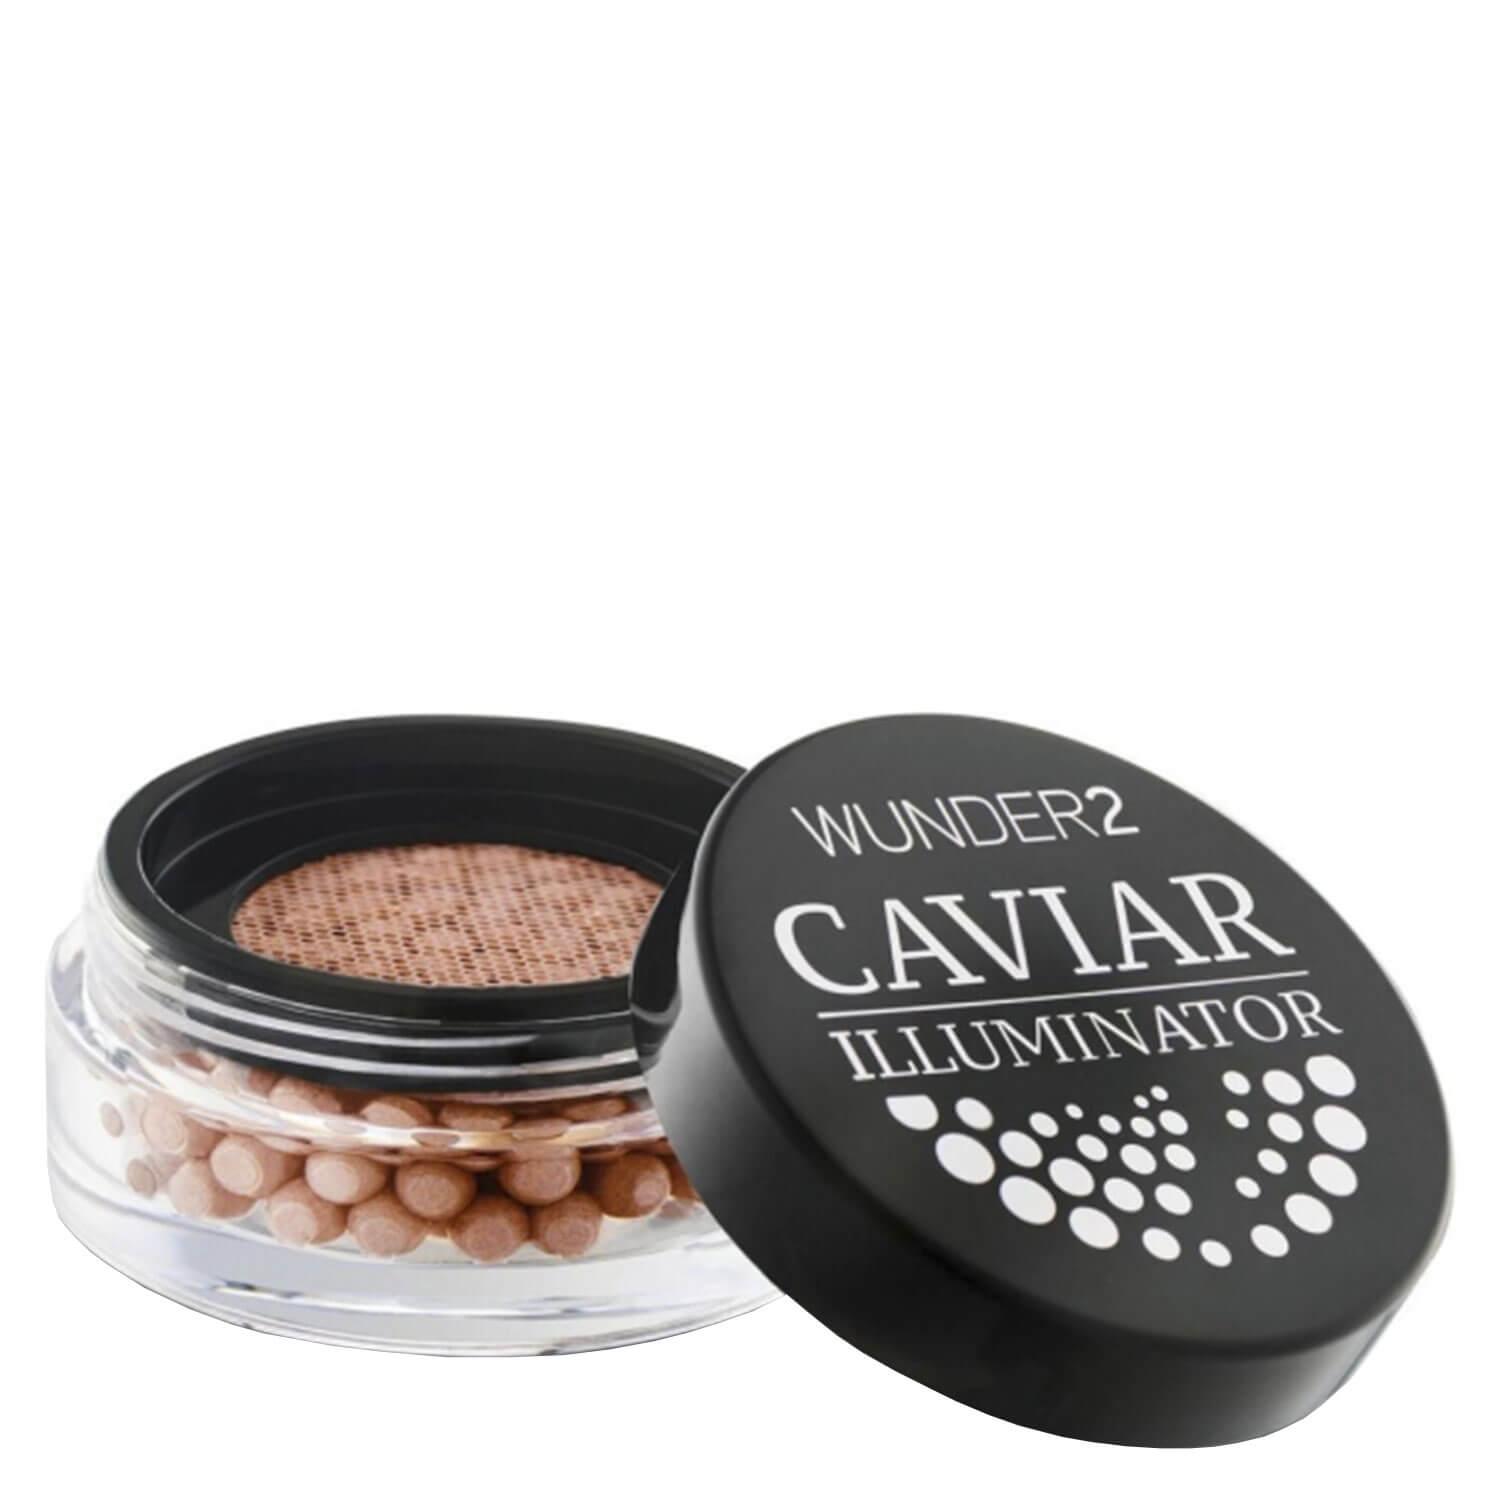 WUNDER2 - Caviar Illuminator Mother of Pearl